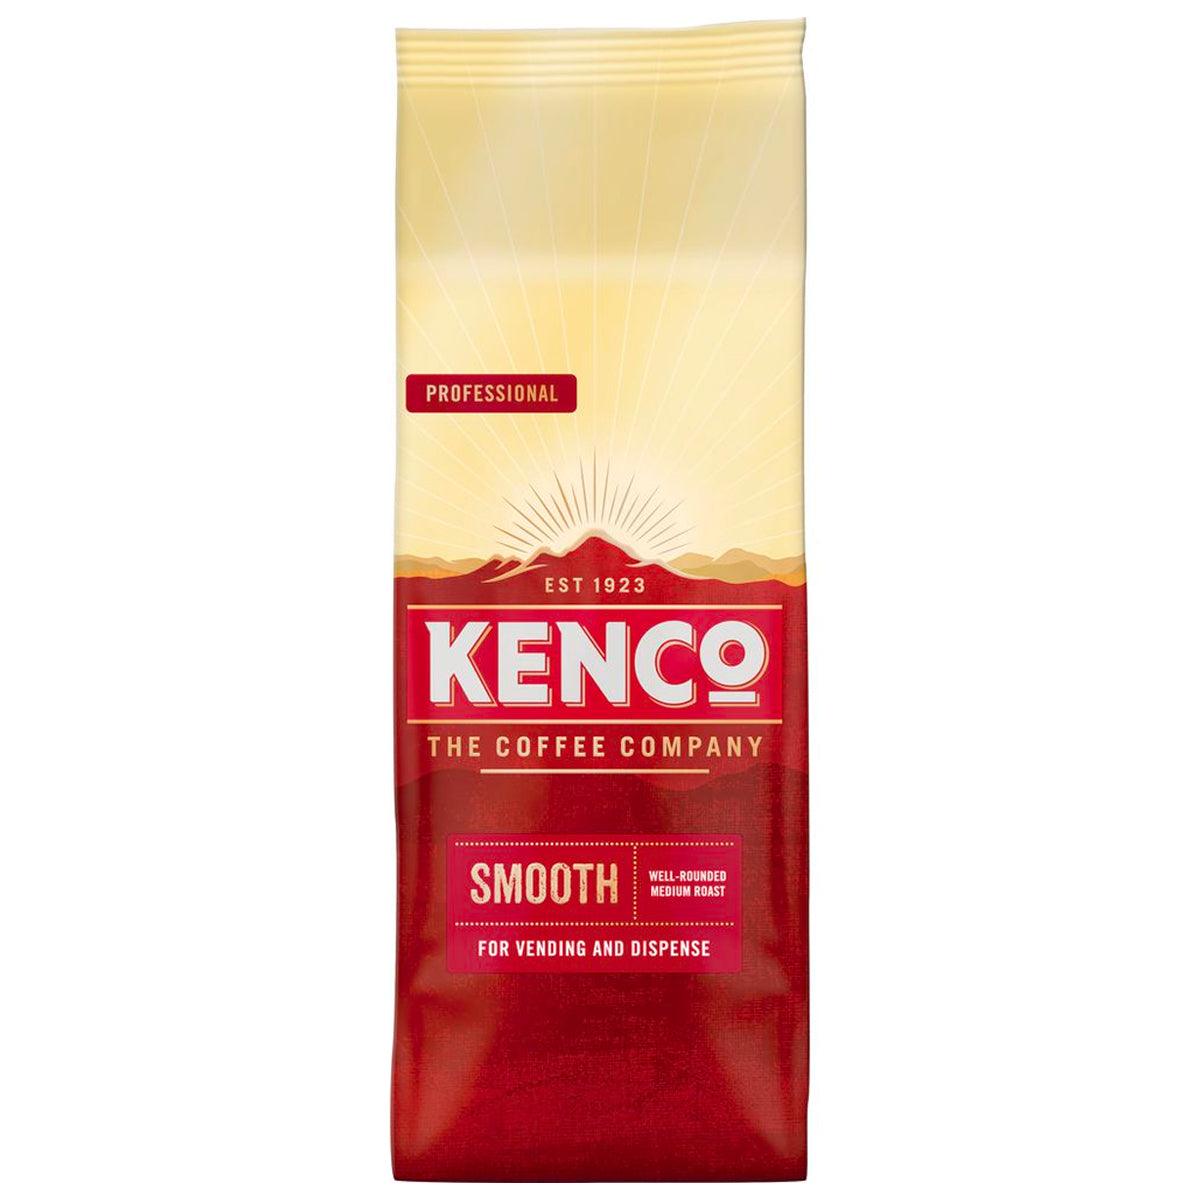 Kenco Smooth Roast Vending Coffee - 10 x 300g Bags (Full Case) - Vending Superstore